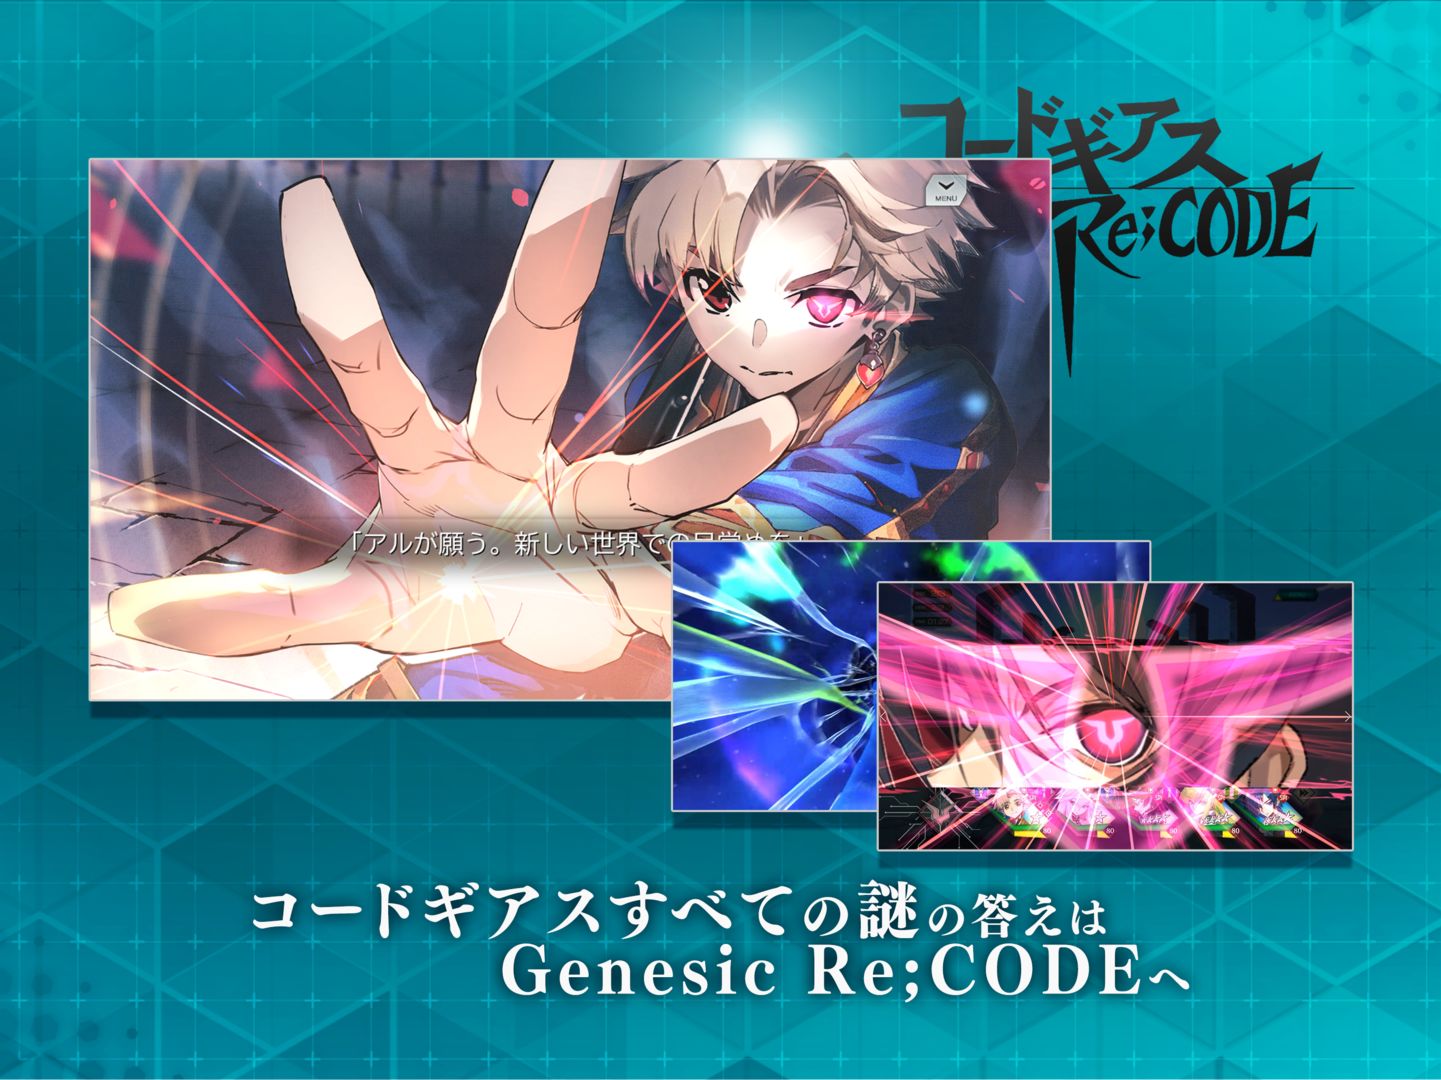 Screenshot of Code Geass Genesic Re;CODE